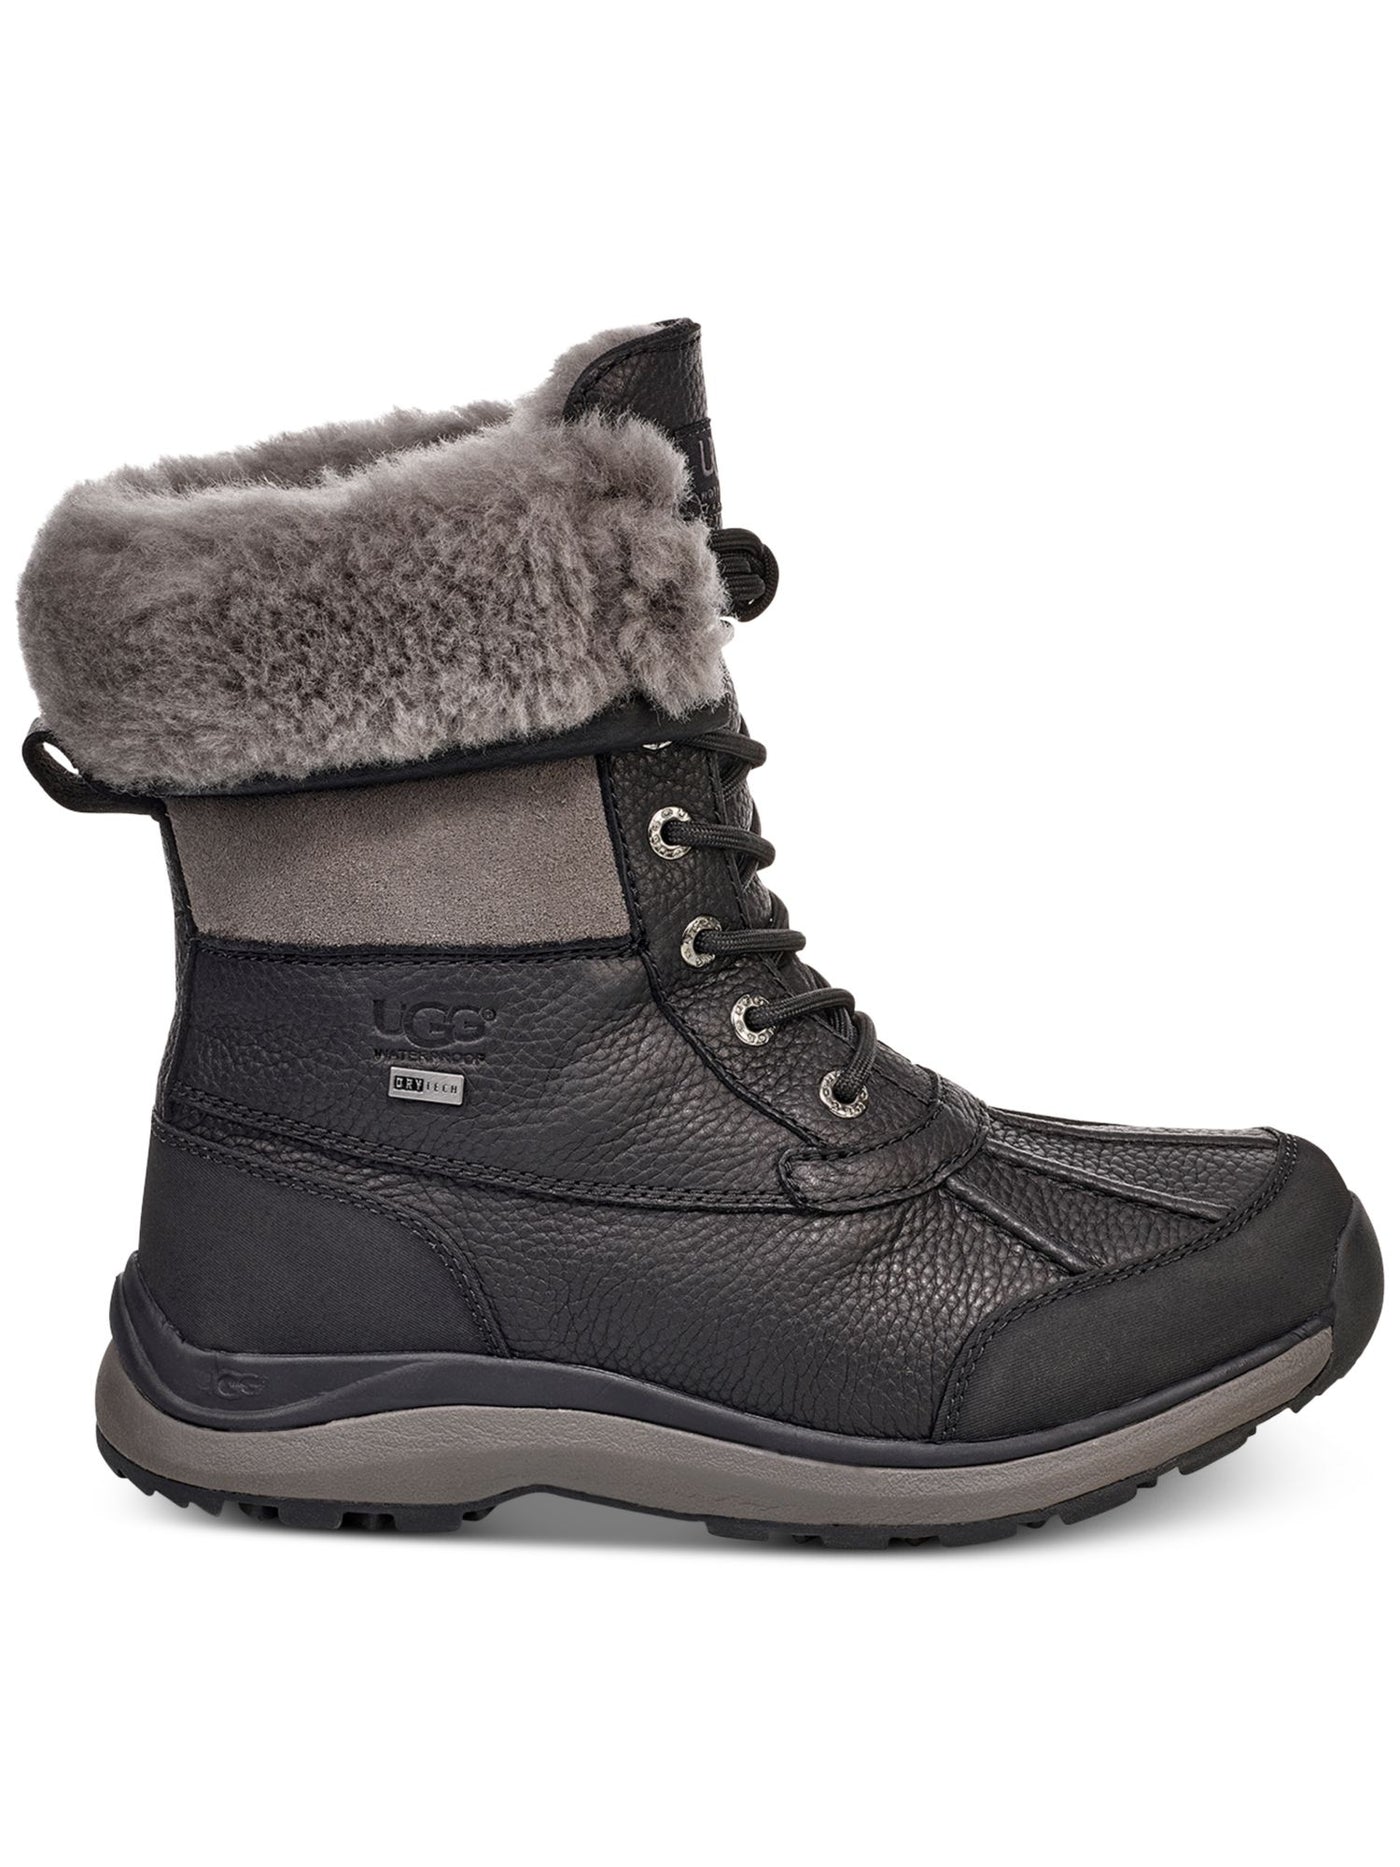 UGG Womens Black Padded Waterproof Adirondack Iii Round Toe Lace-Up Leather Winter Boots 6.5